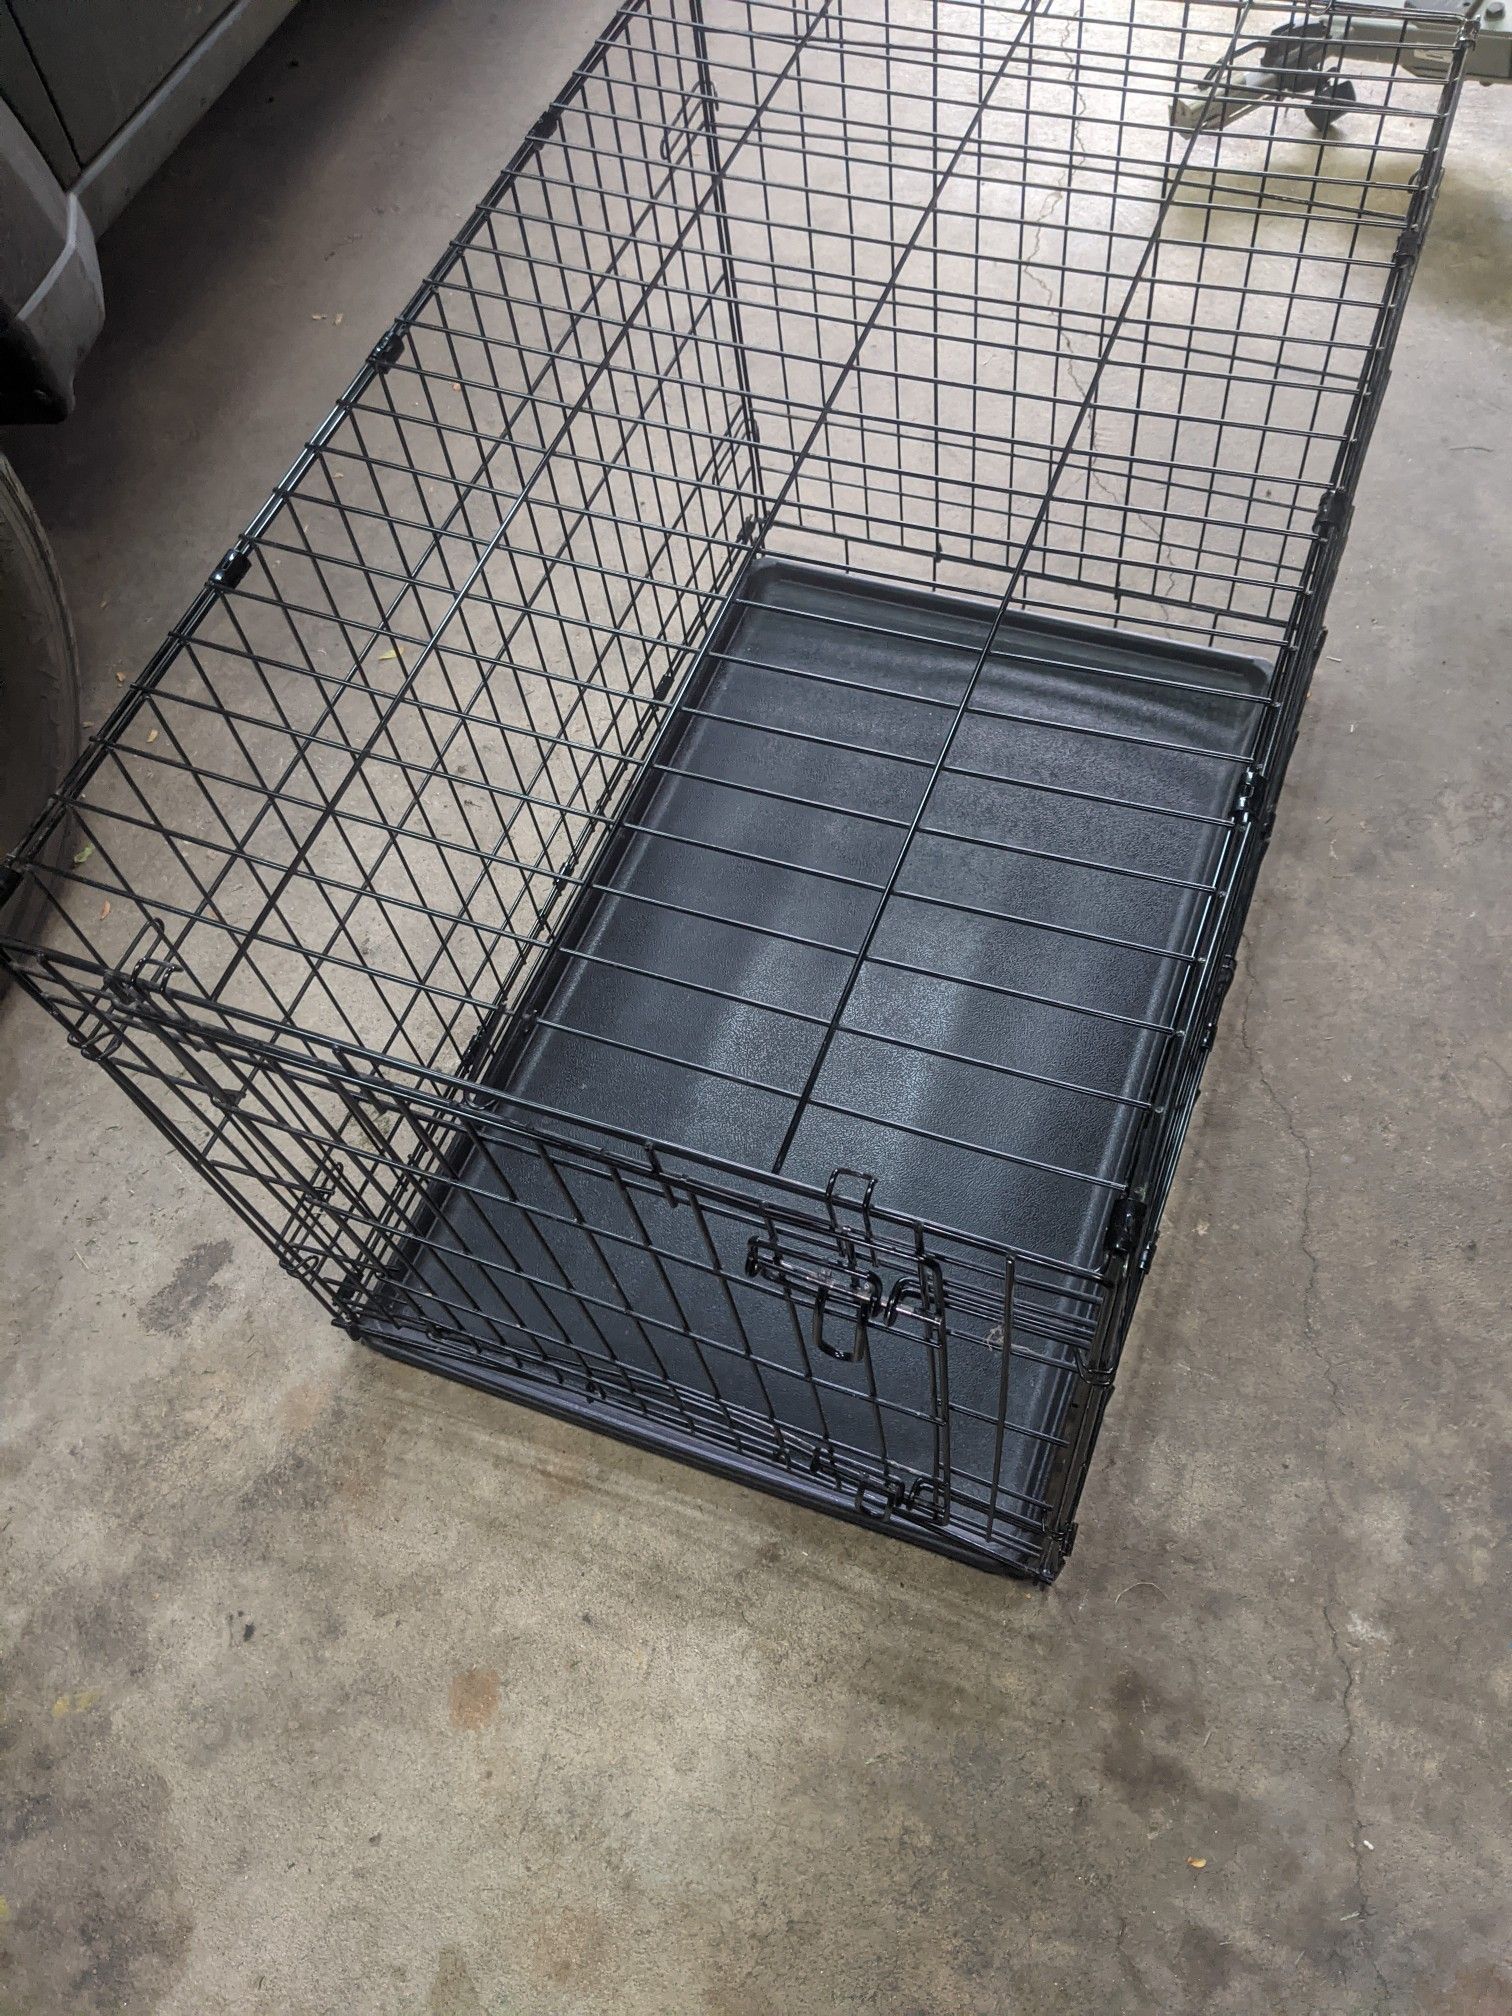 1-Door Folding Dog Crate, 36" L x 22" W x 24" H